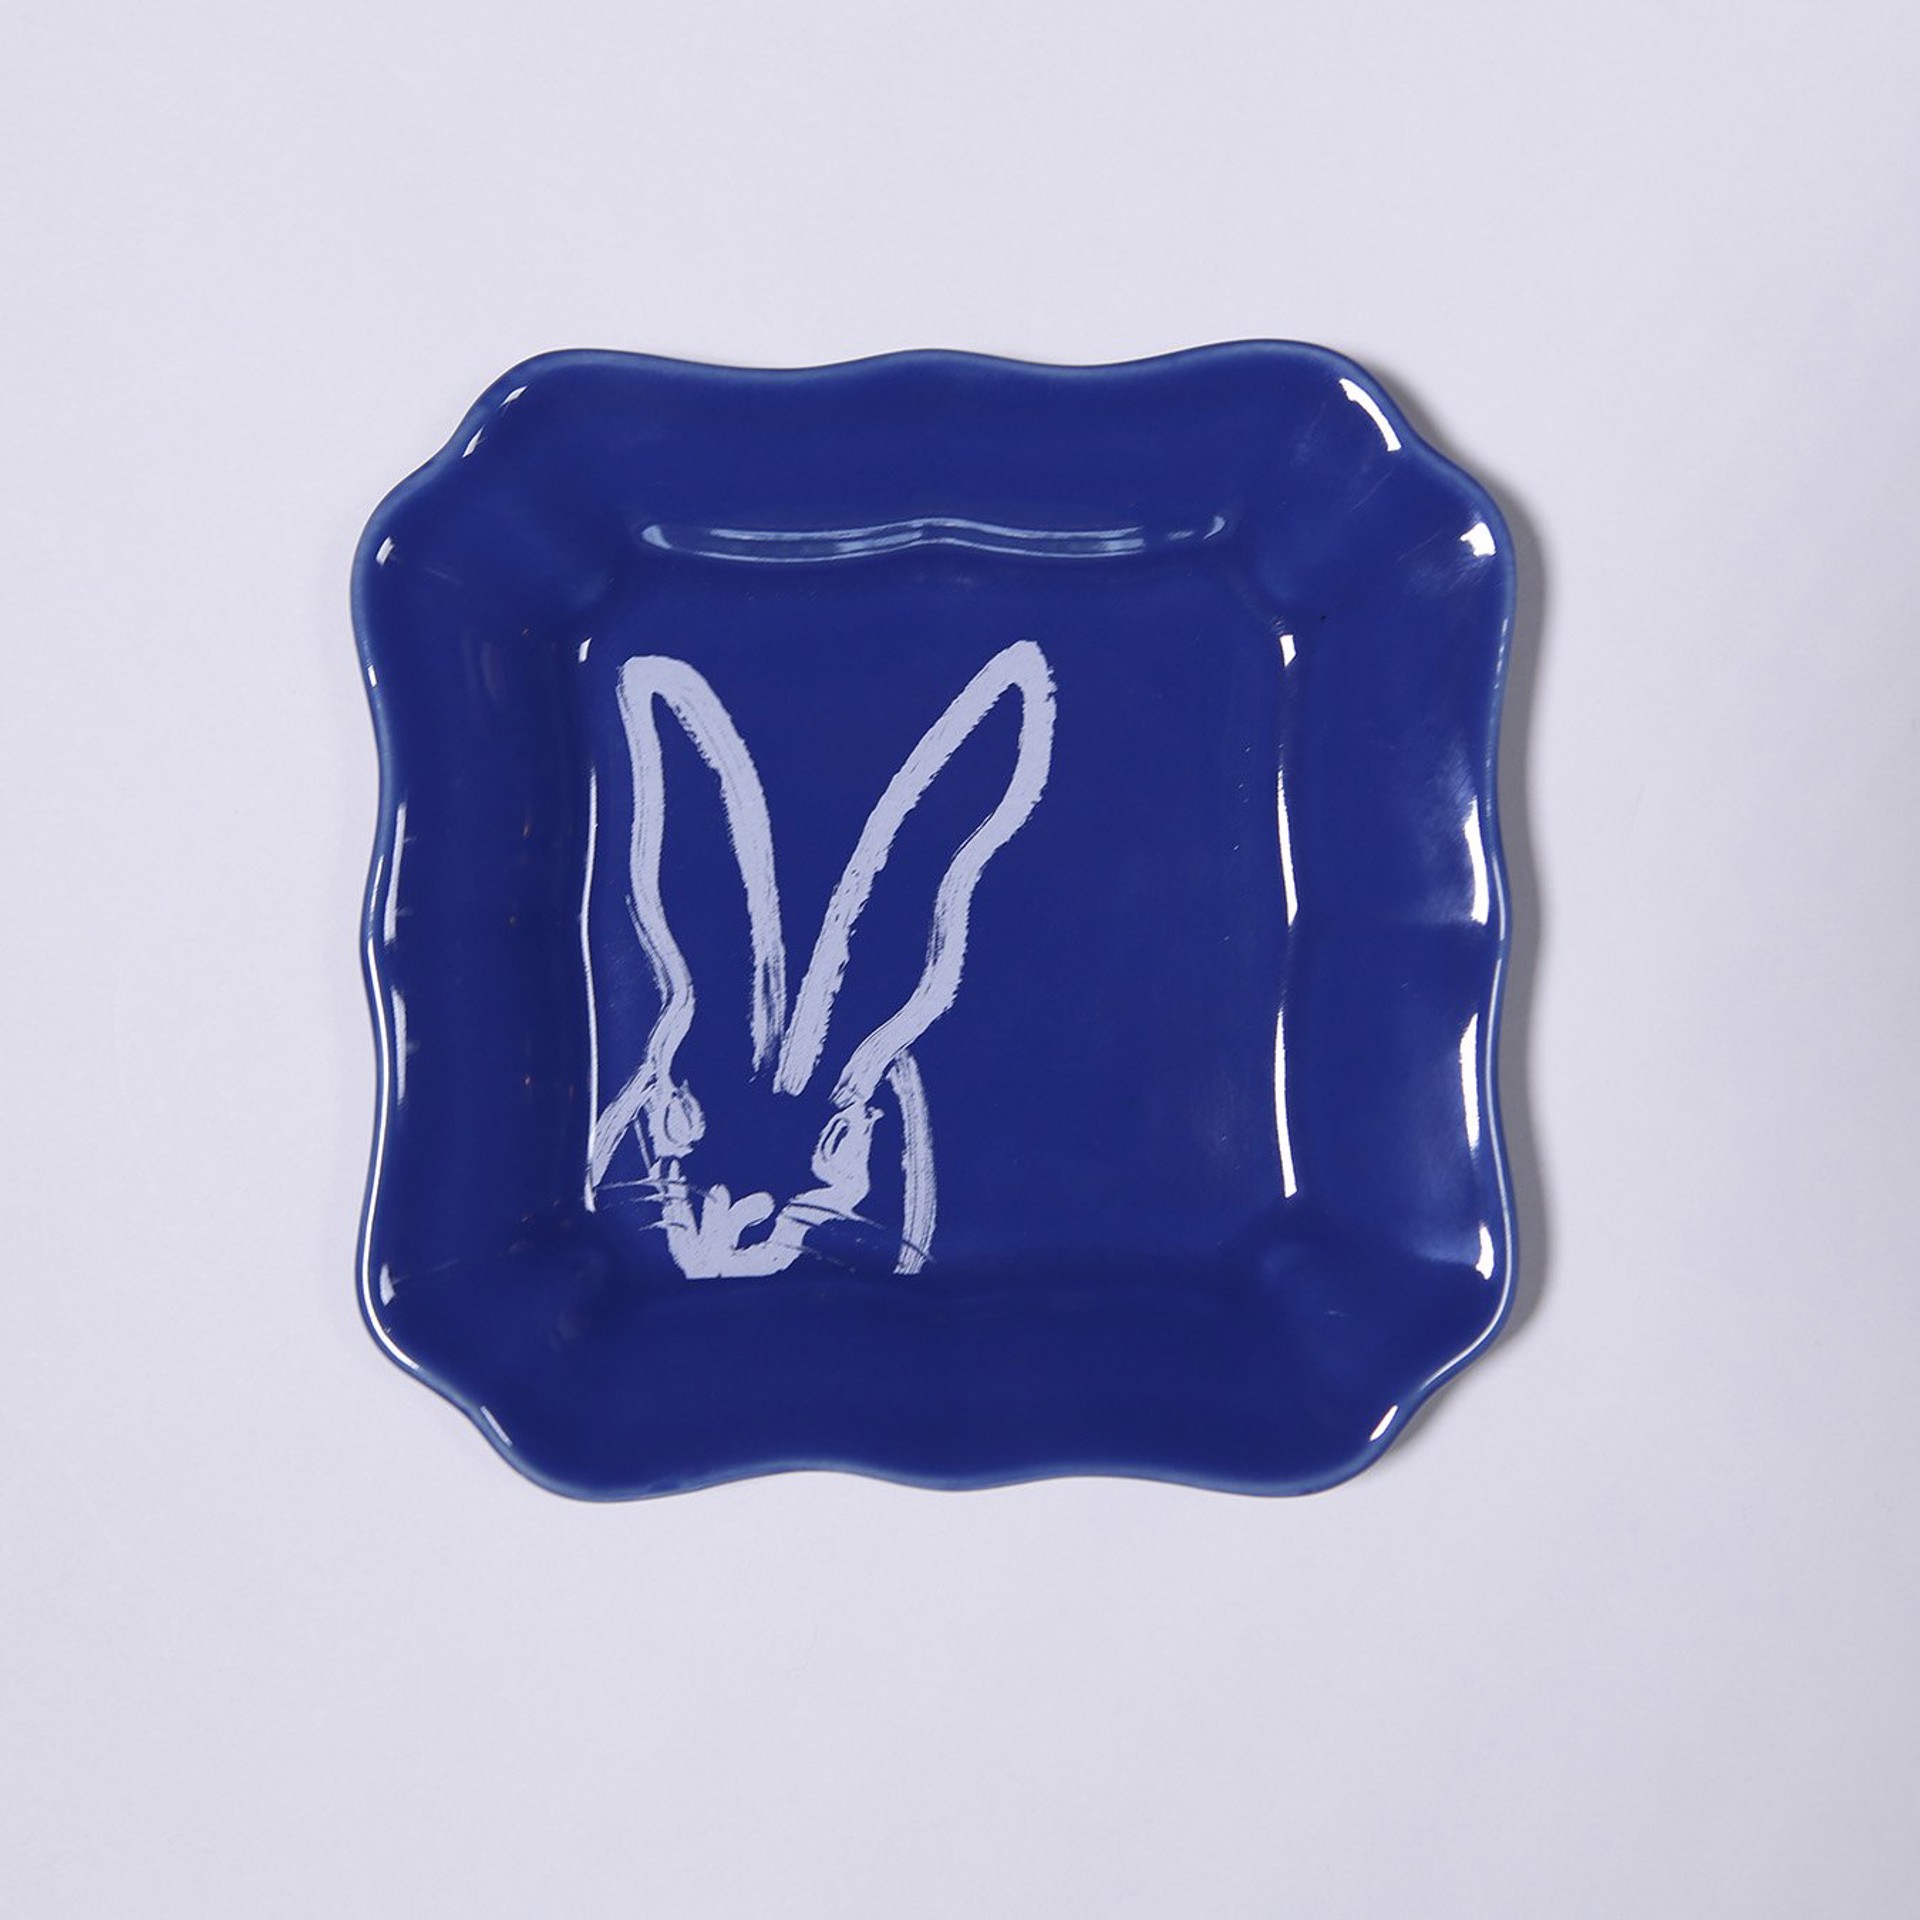 Bunny Portrait Plate in Blue by Hunt Slonem